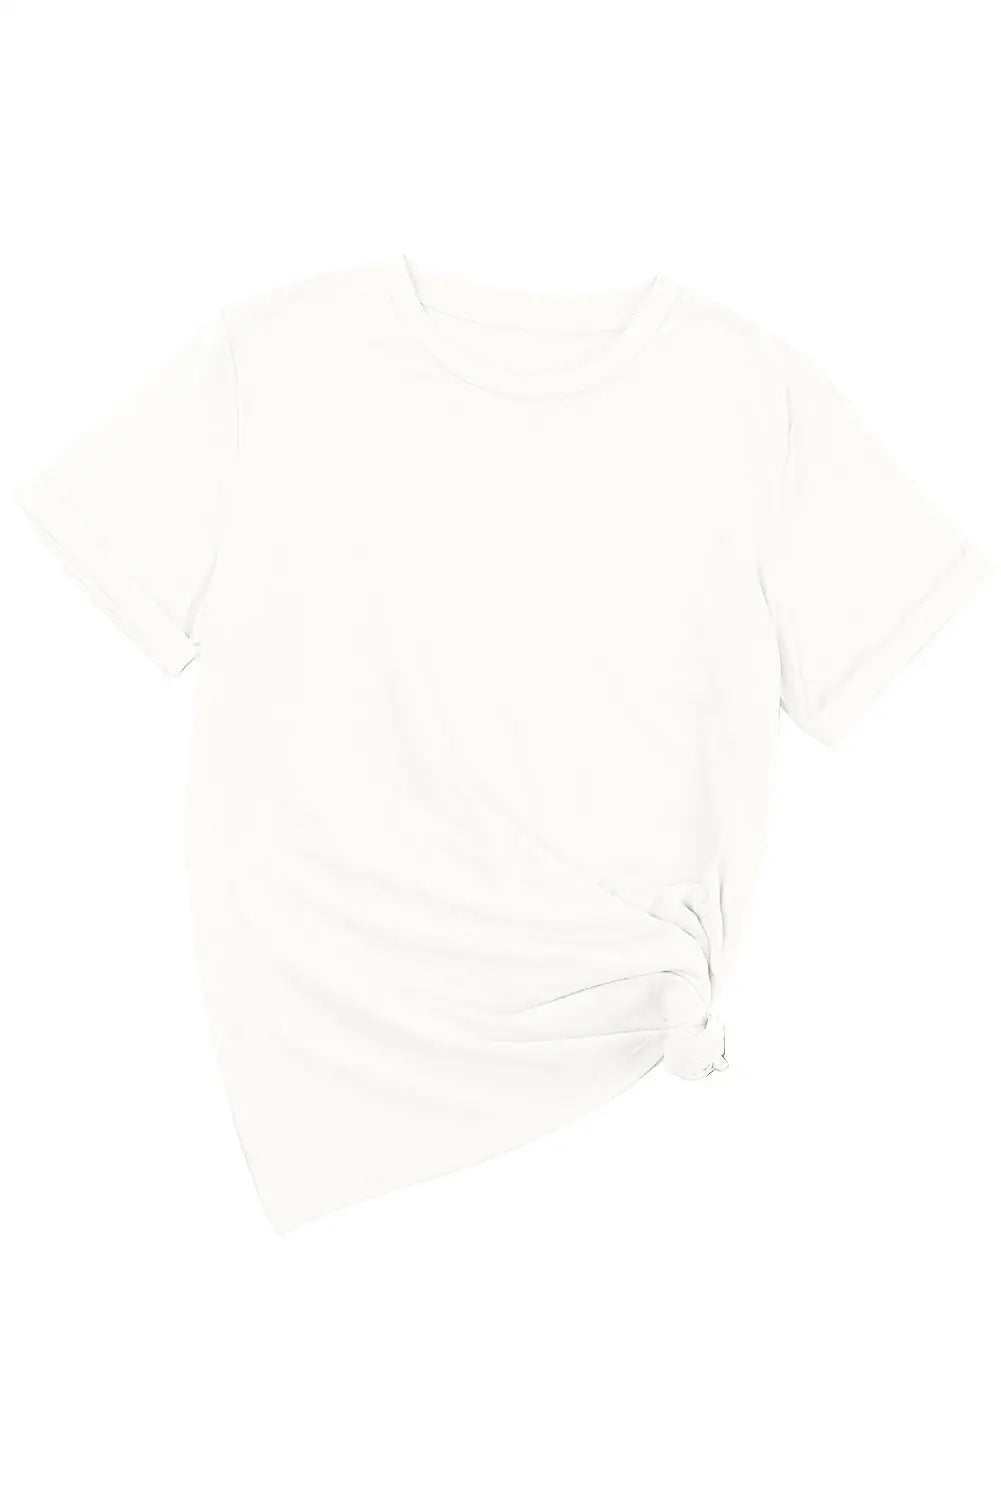 Gray casual plain crew neck tee - t-shirts